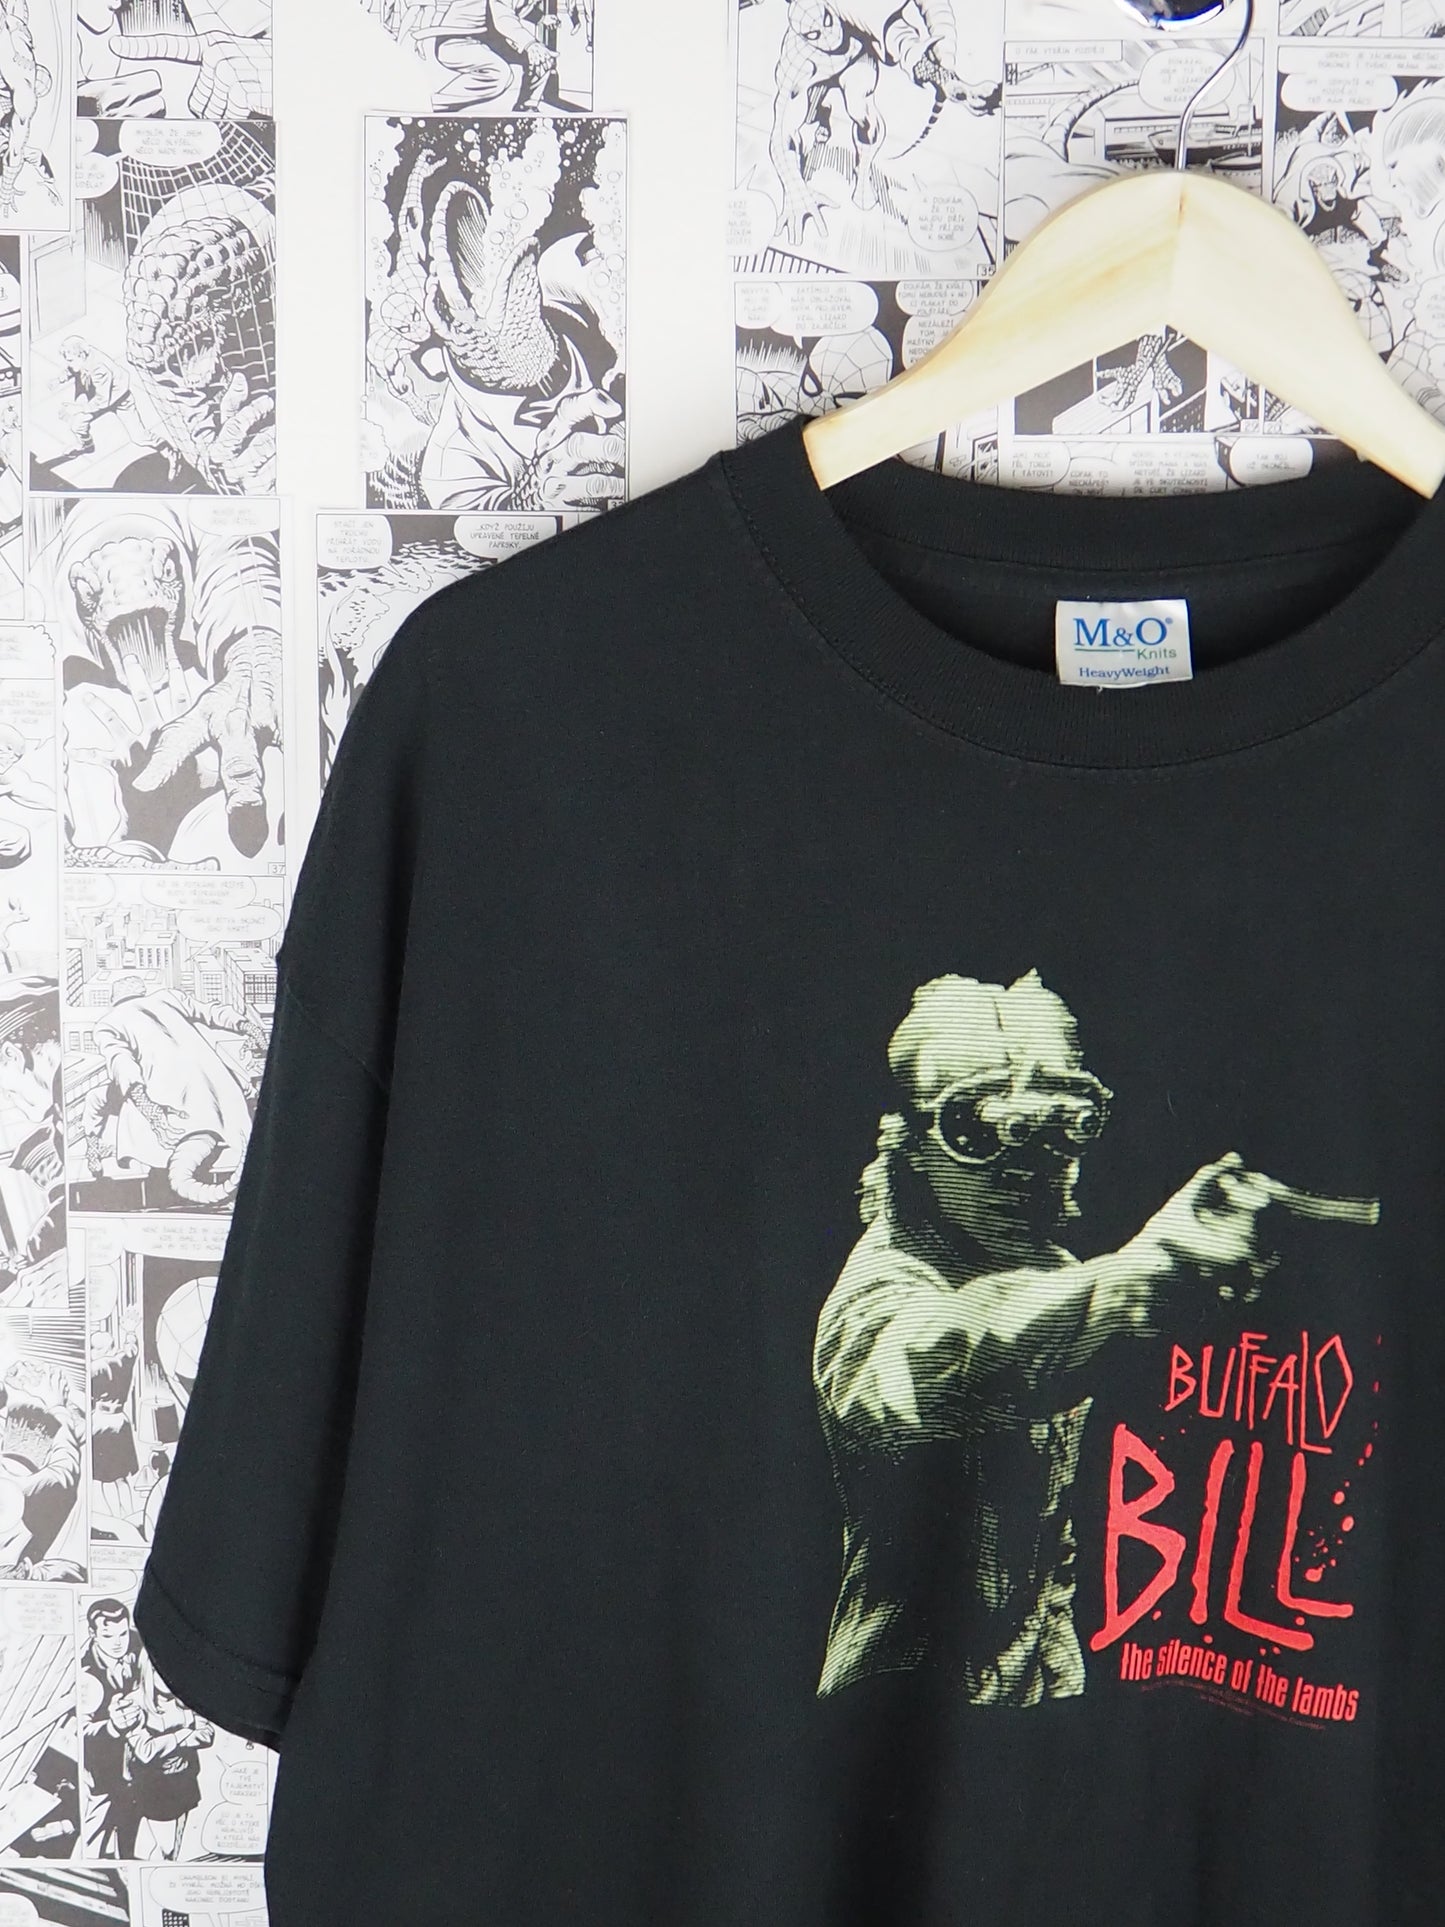 Vintage Silence of the Lambs "Buffalo Bill" t-shirt - size XL